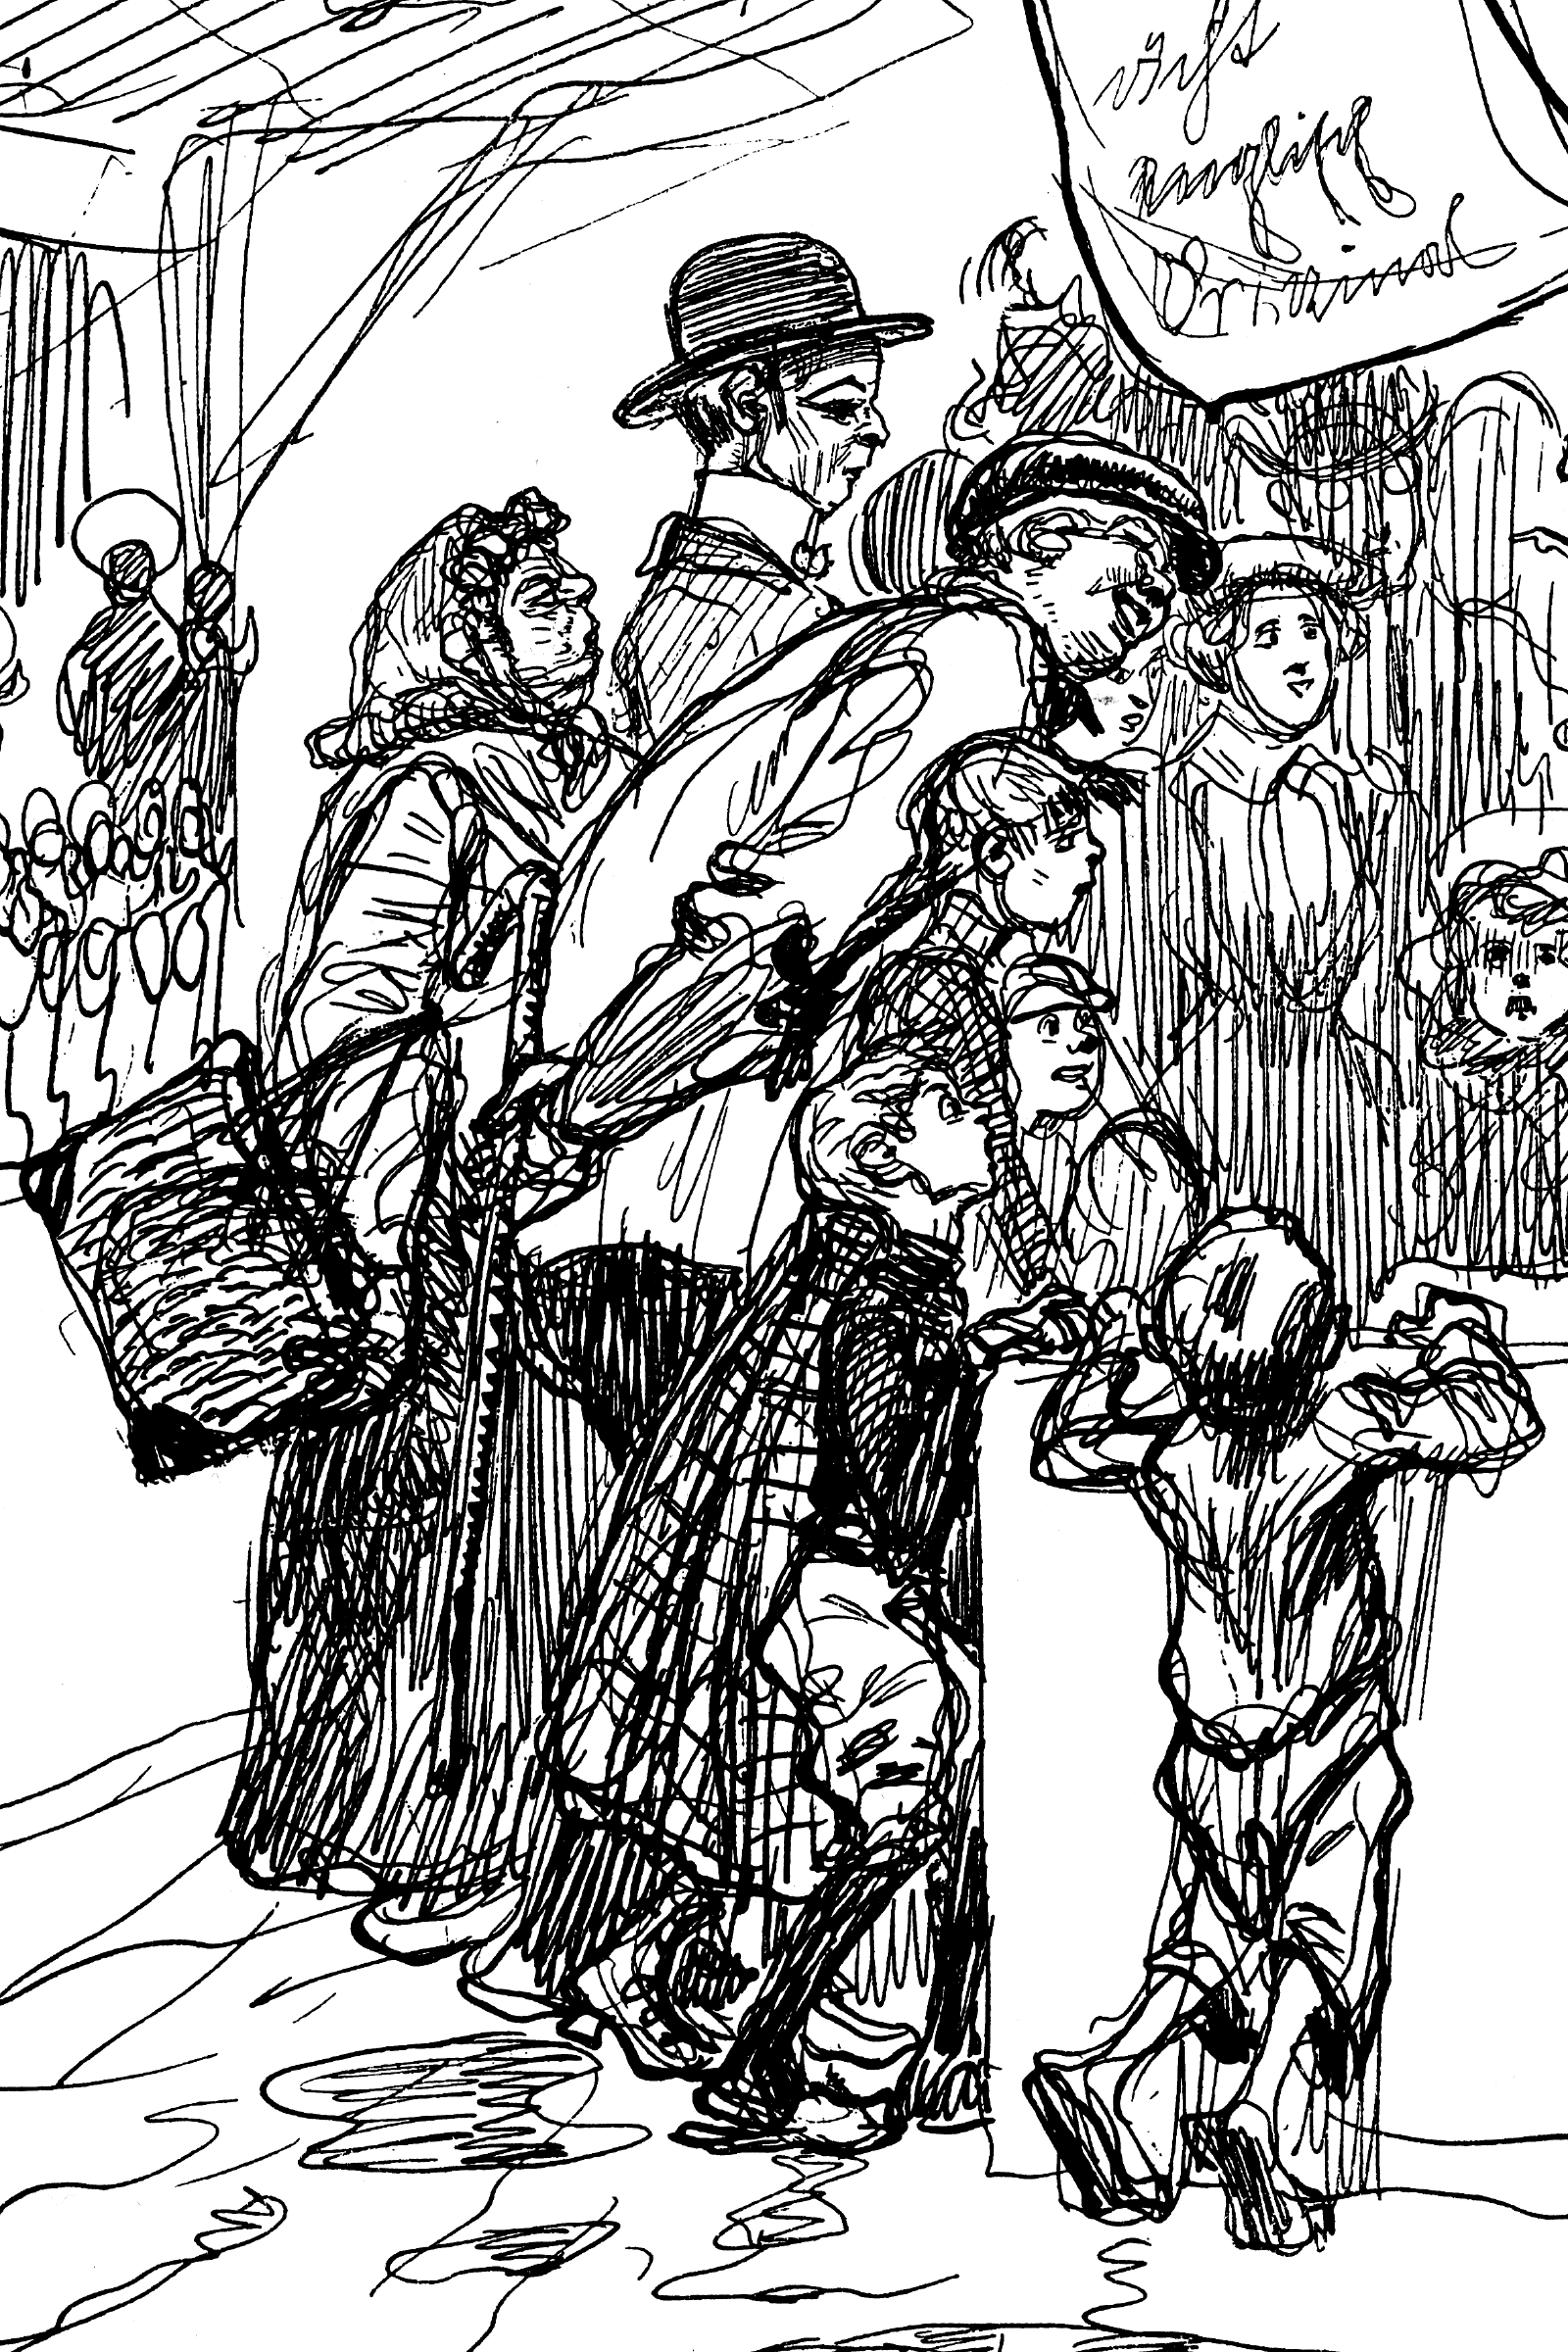 Heinrich Kley illustration scanned from 1911 book